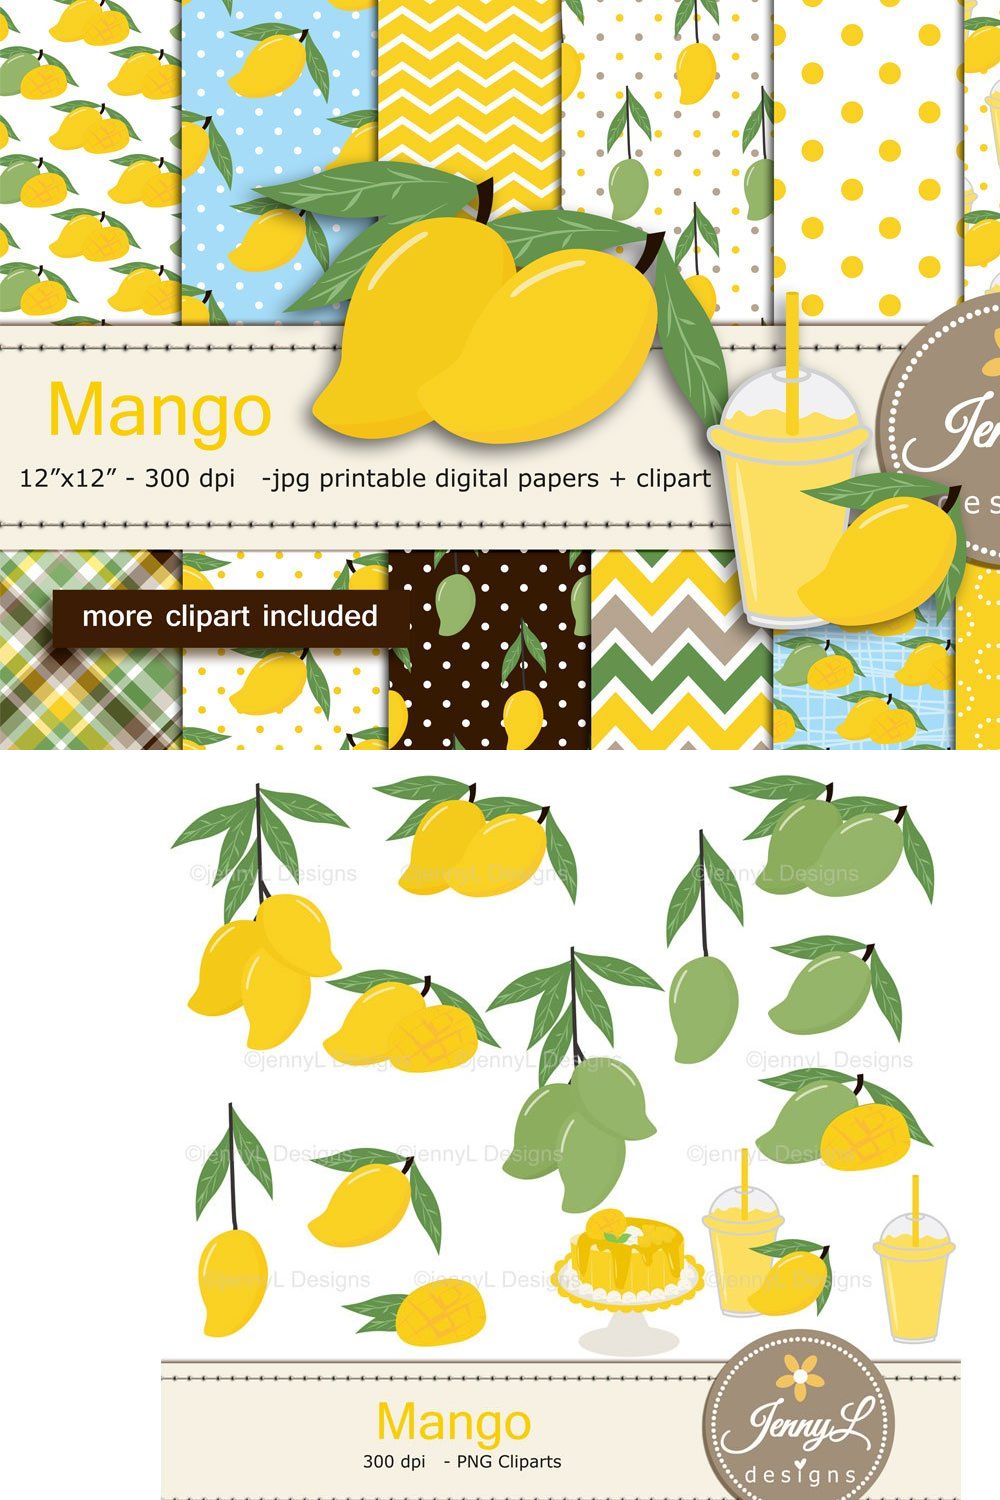 Mango Digital Paper & Clipart pinterest preview image.